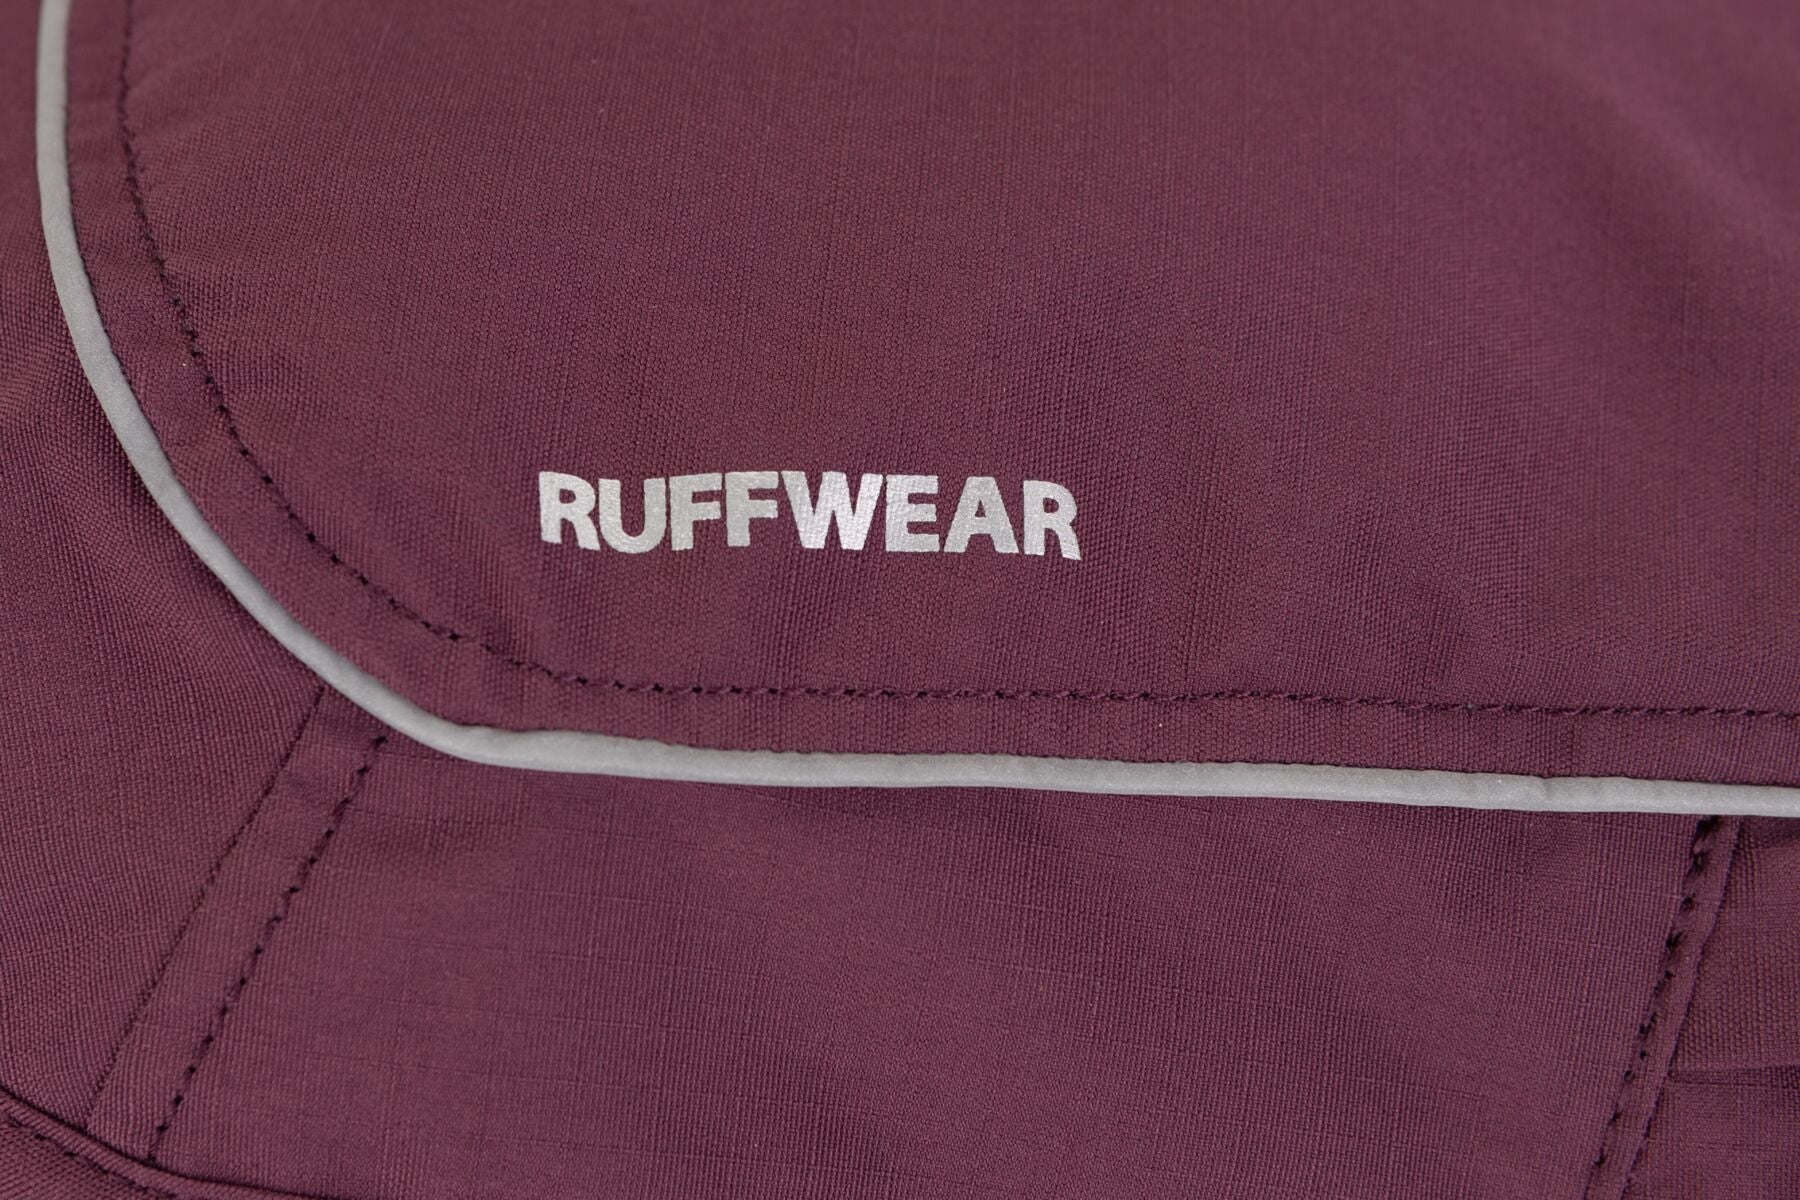 2 en 1 Abrigo Overcoat Fuse con Pechera Integrada en Púrpura (Purple Rain) de Ruffwear